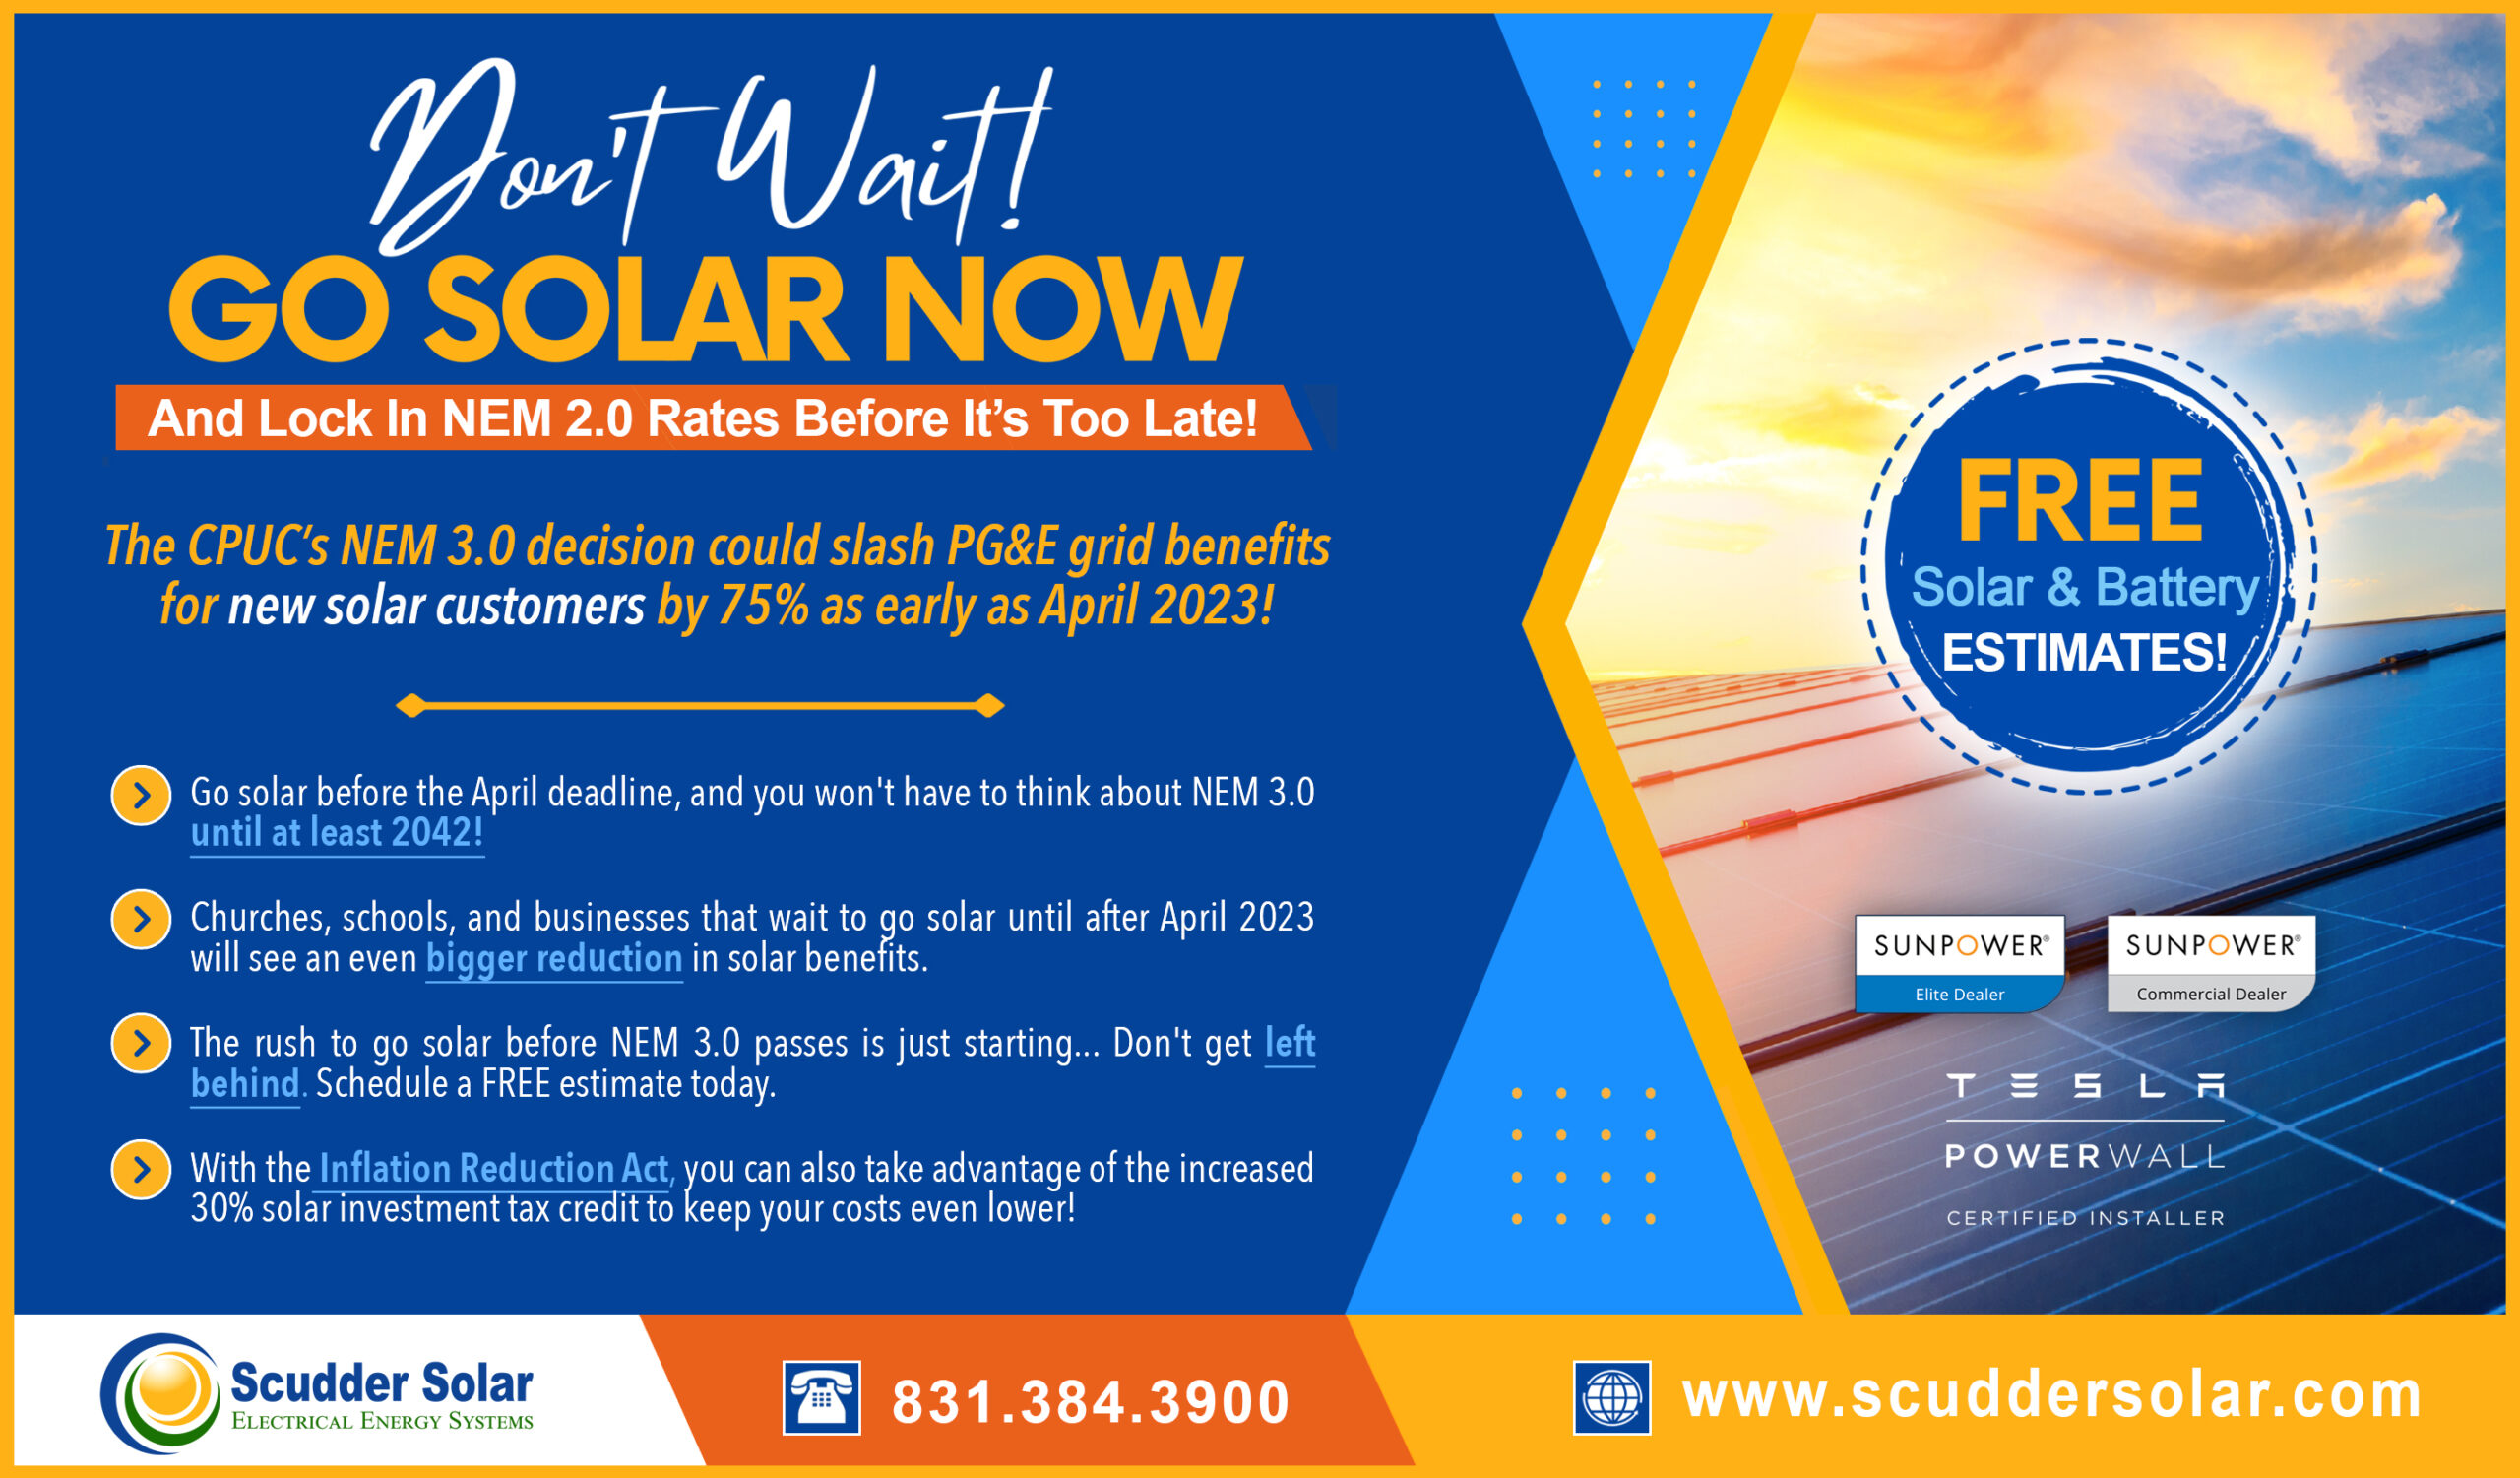 NEM 3.0 Solar Information and Deadlines